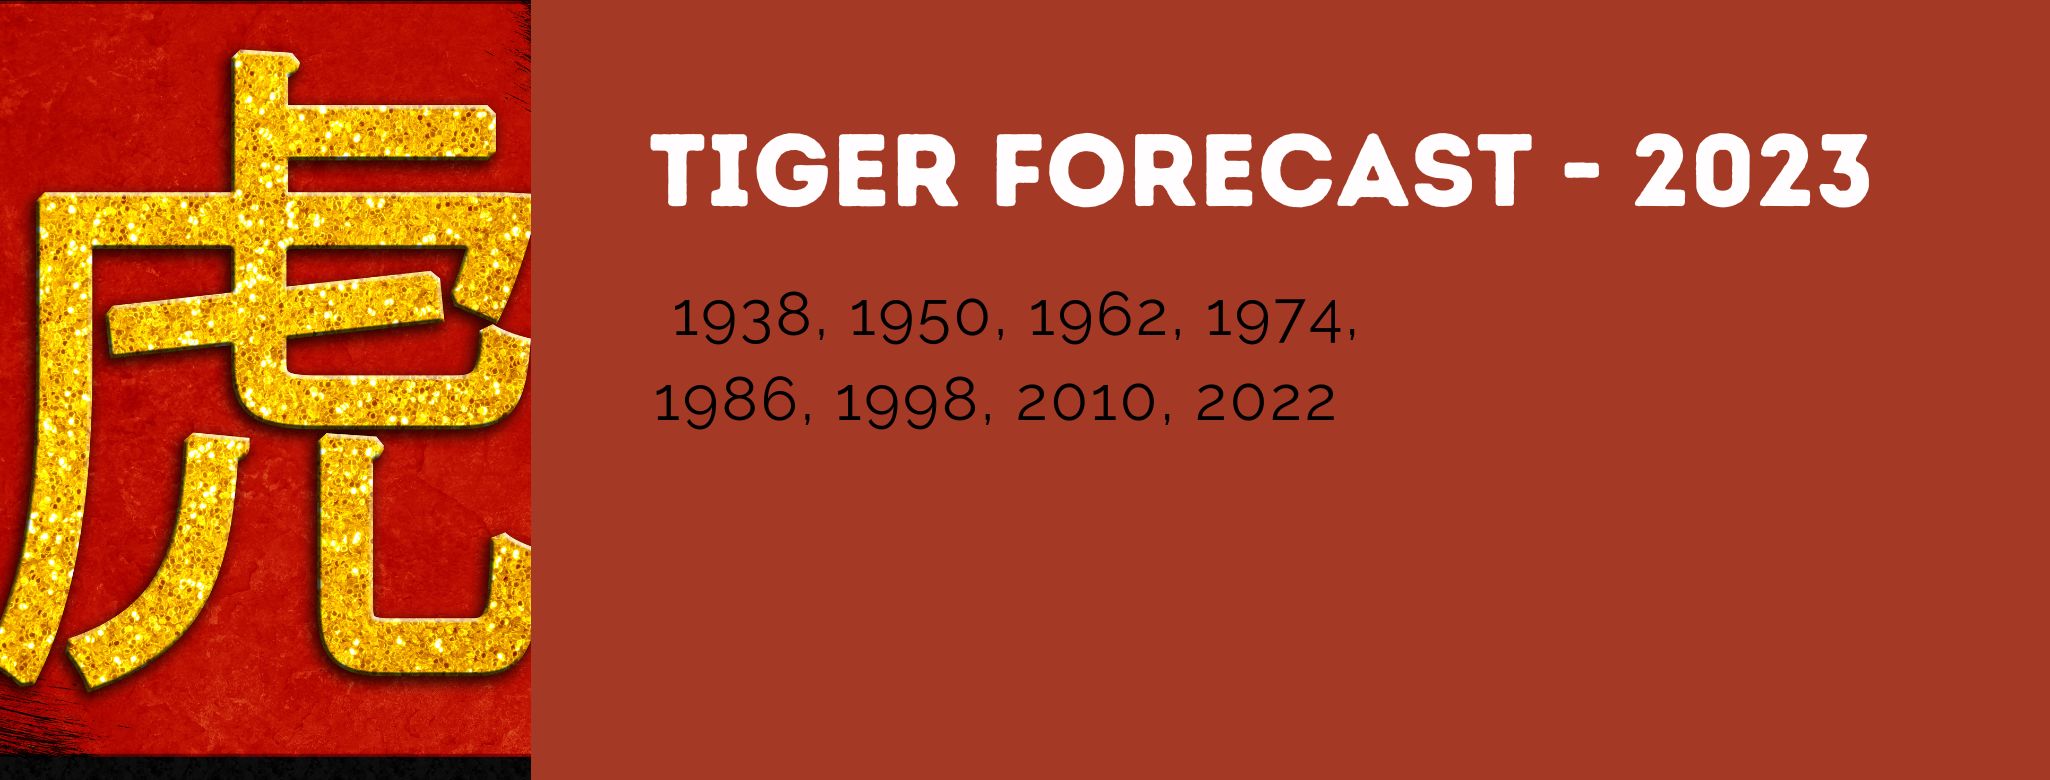 Tiger Chinese Zodiac Forecast - 2023